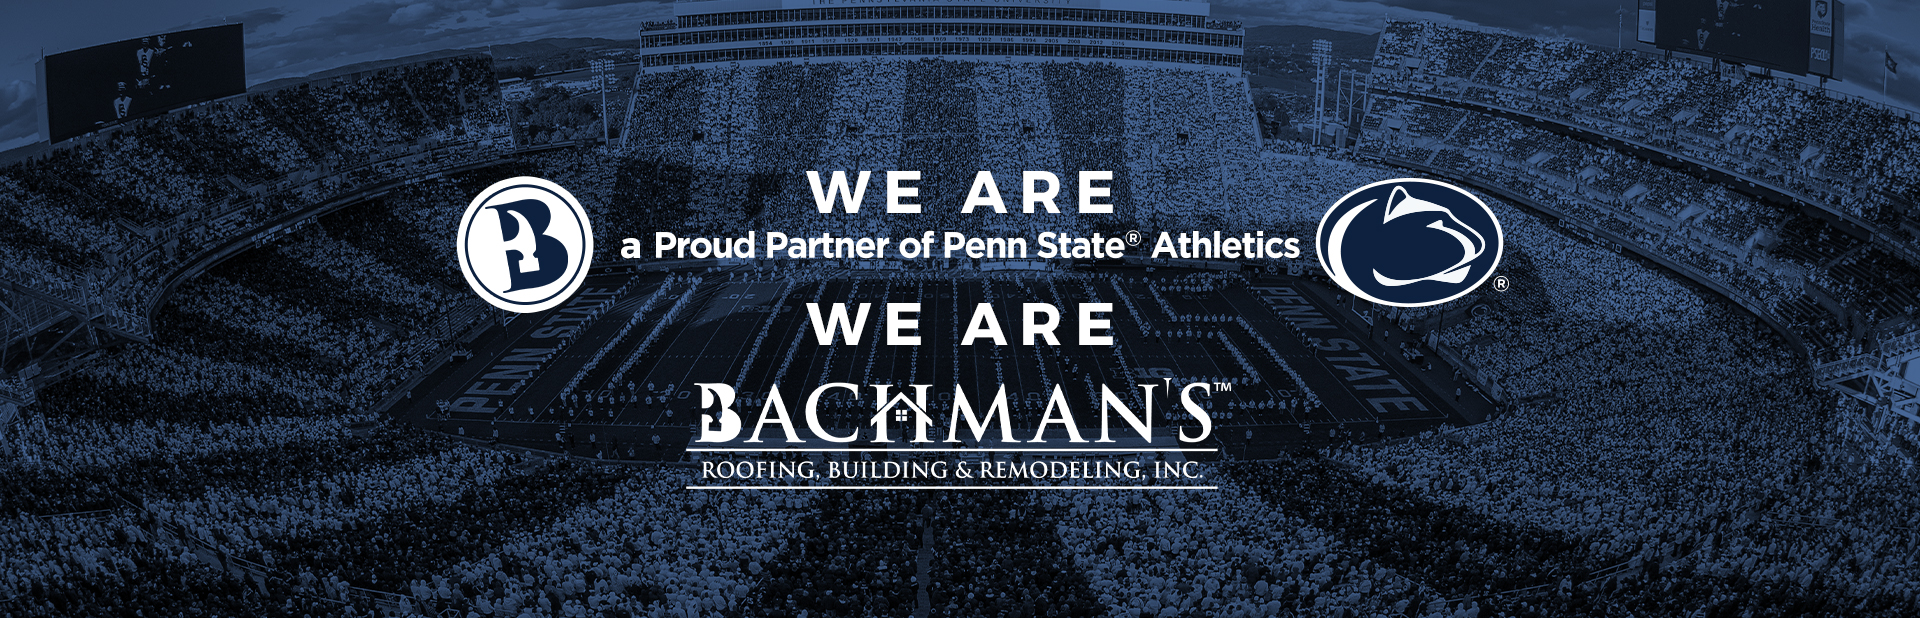 Bachman's Penn State Webslide Image